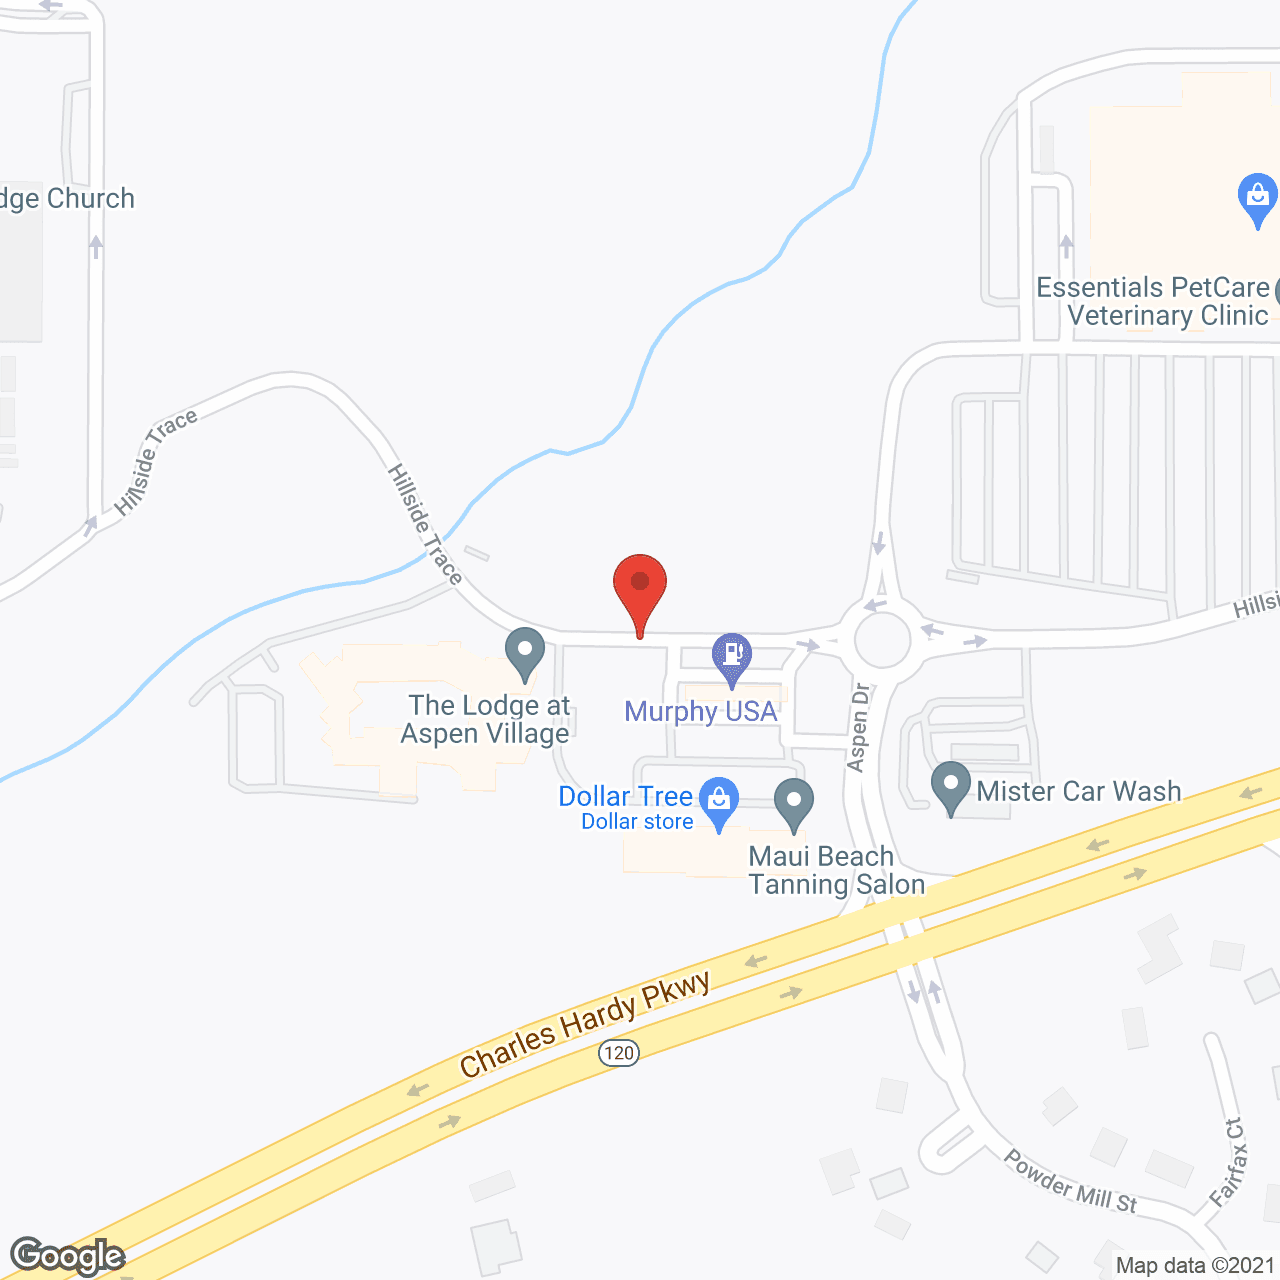 Township at Aspen Village in google map